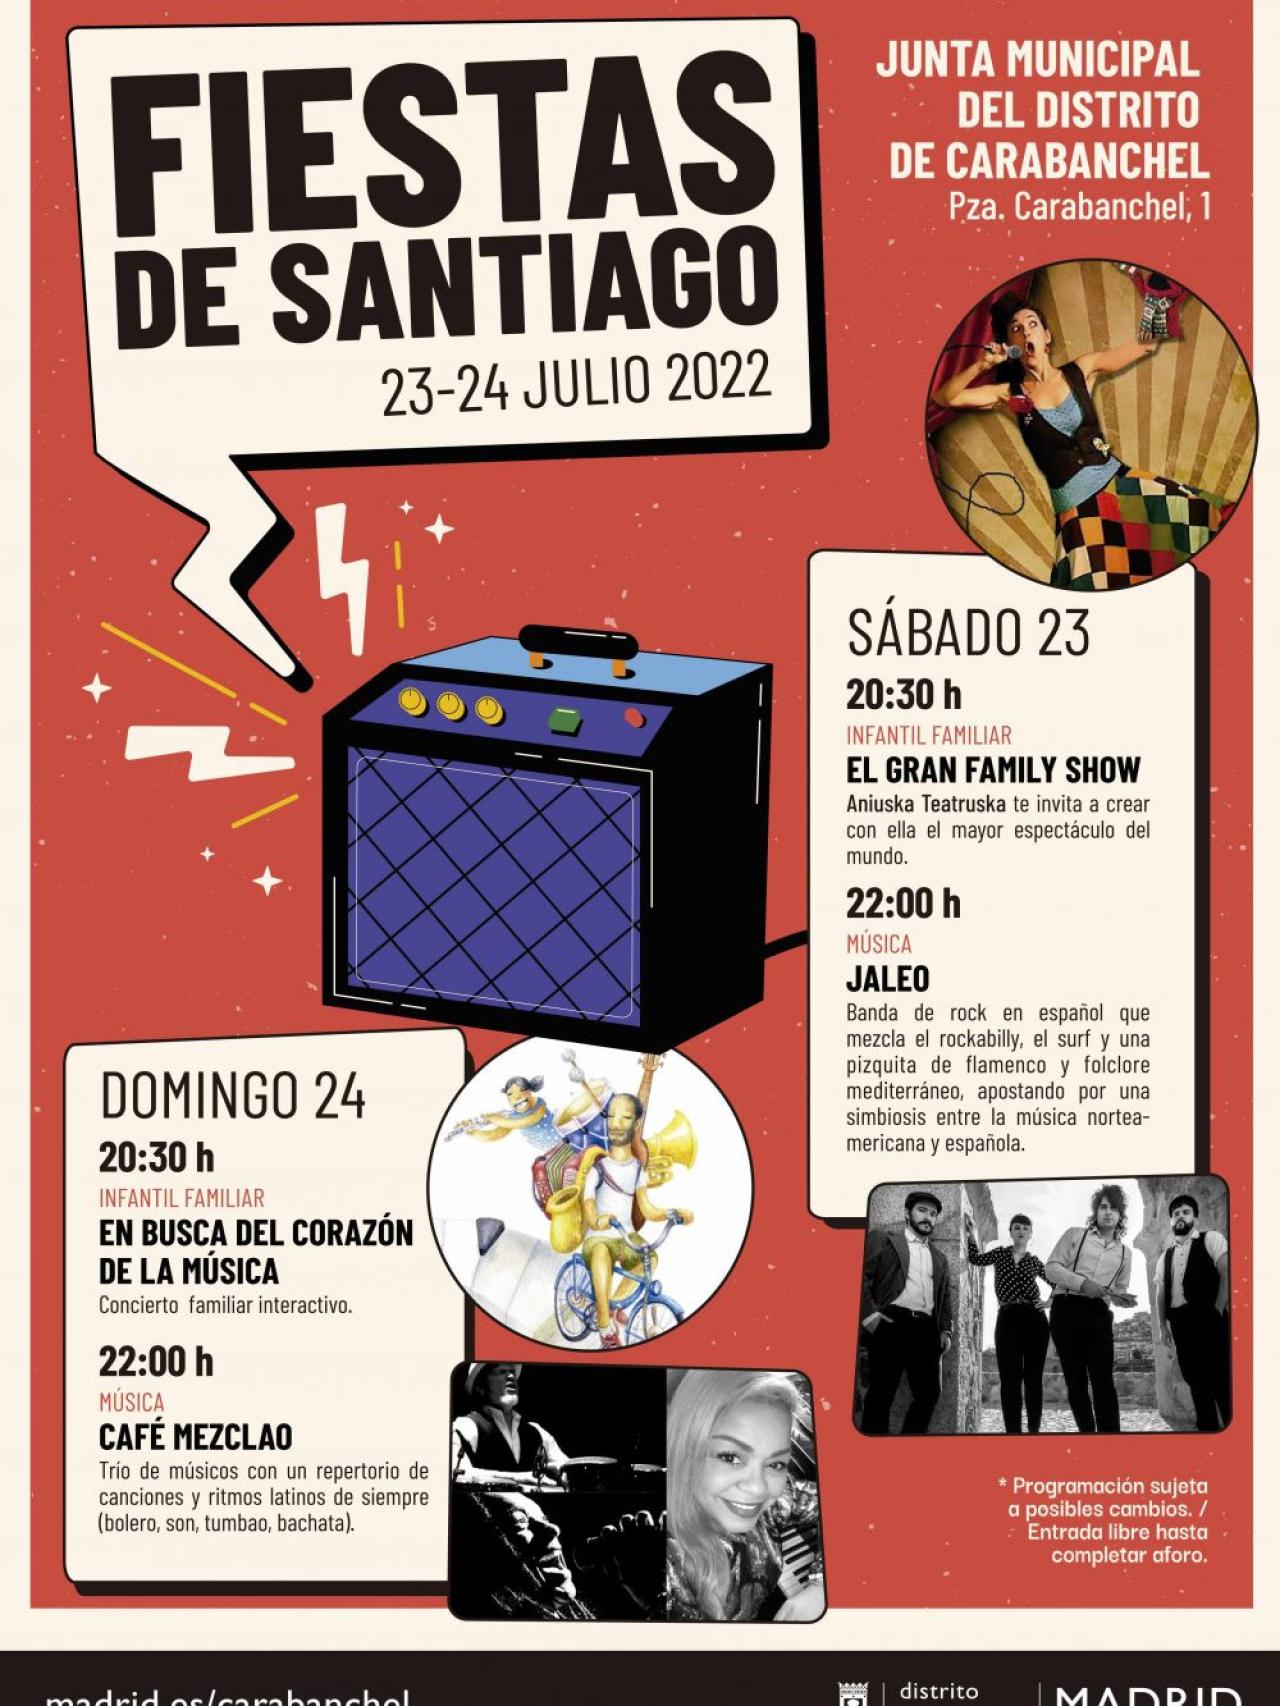 Cartel Fiestas de Santiago Carabanchel 2022.